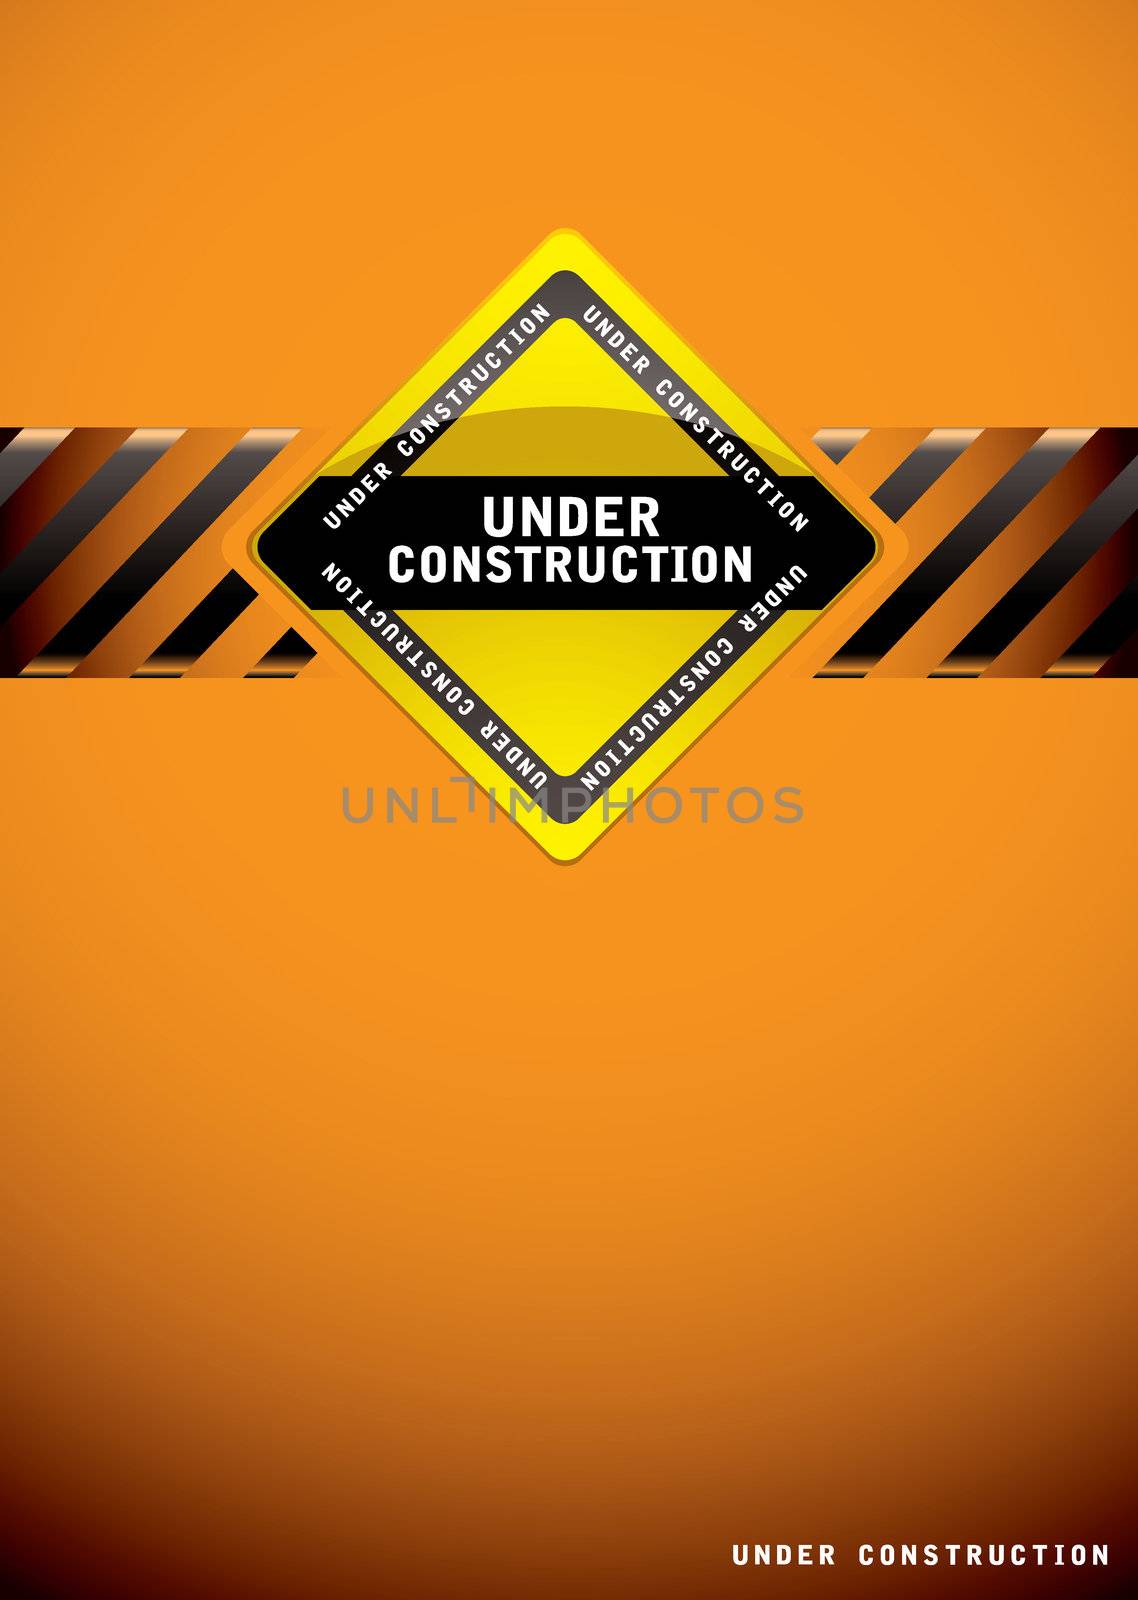 Under construction orange by nicemonkey